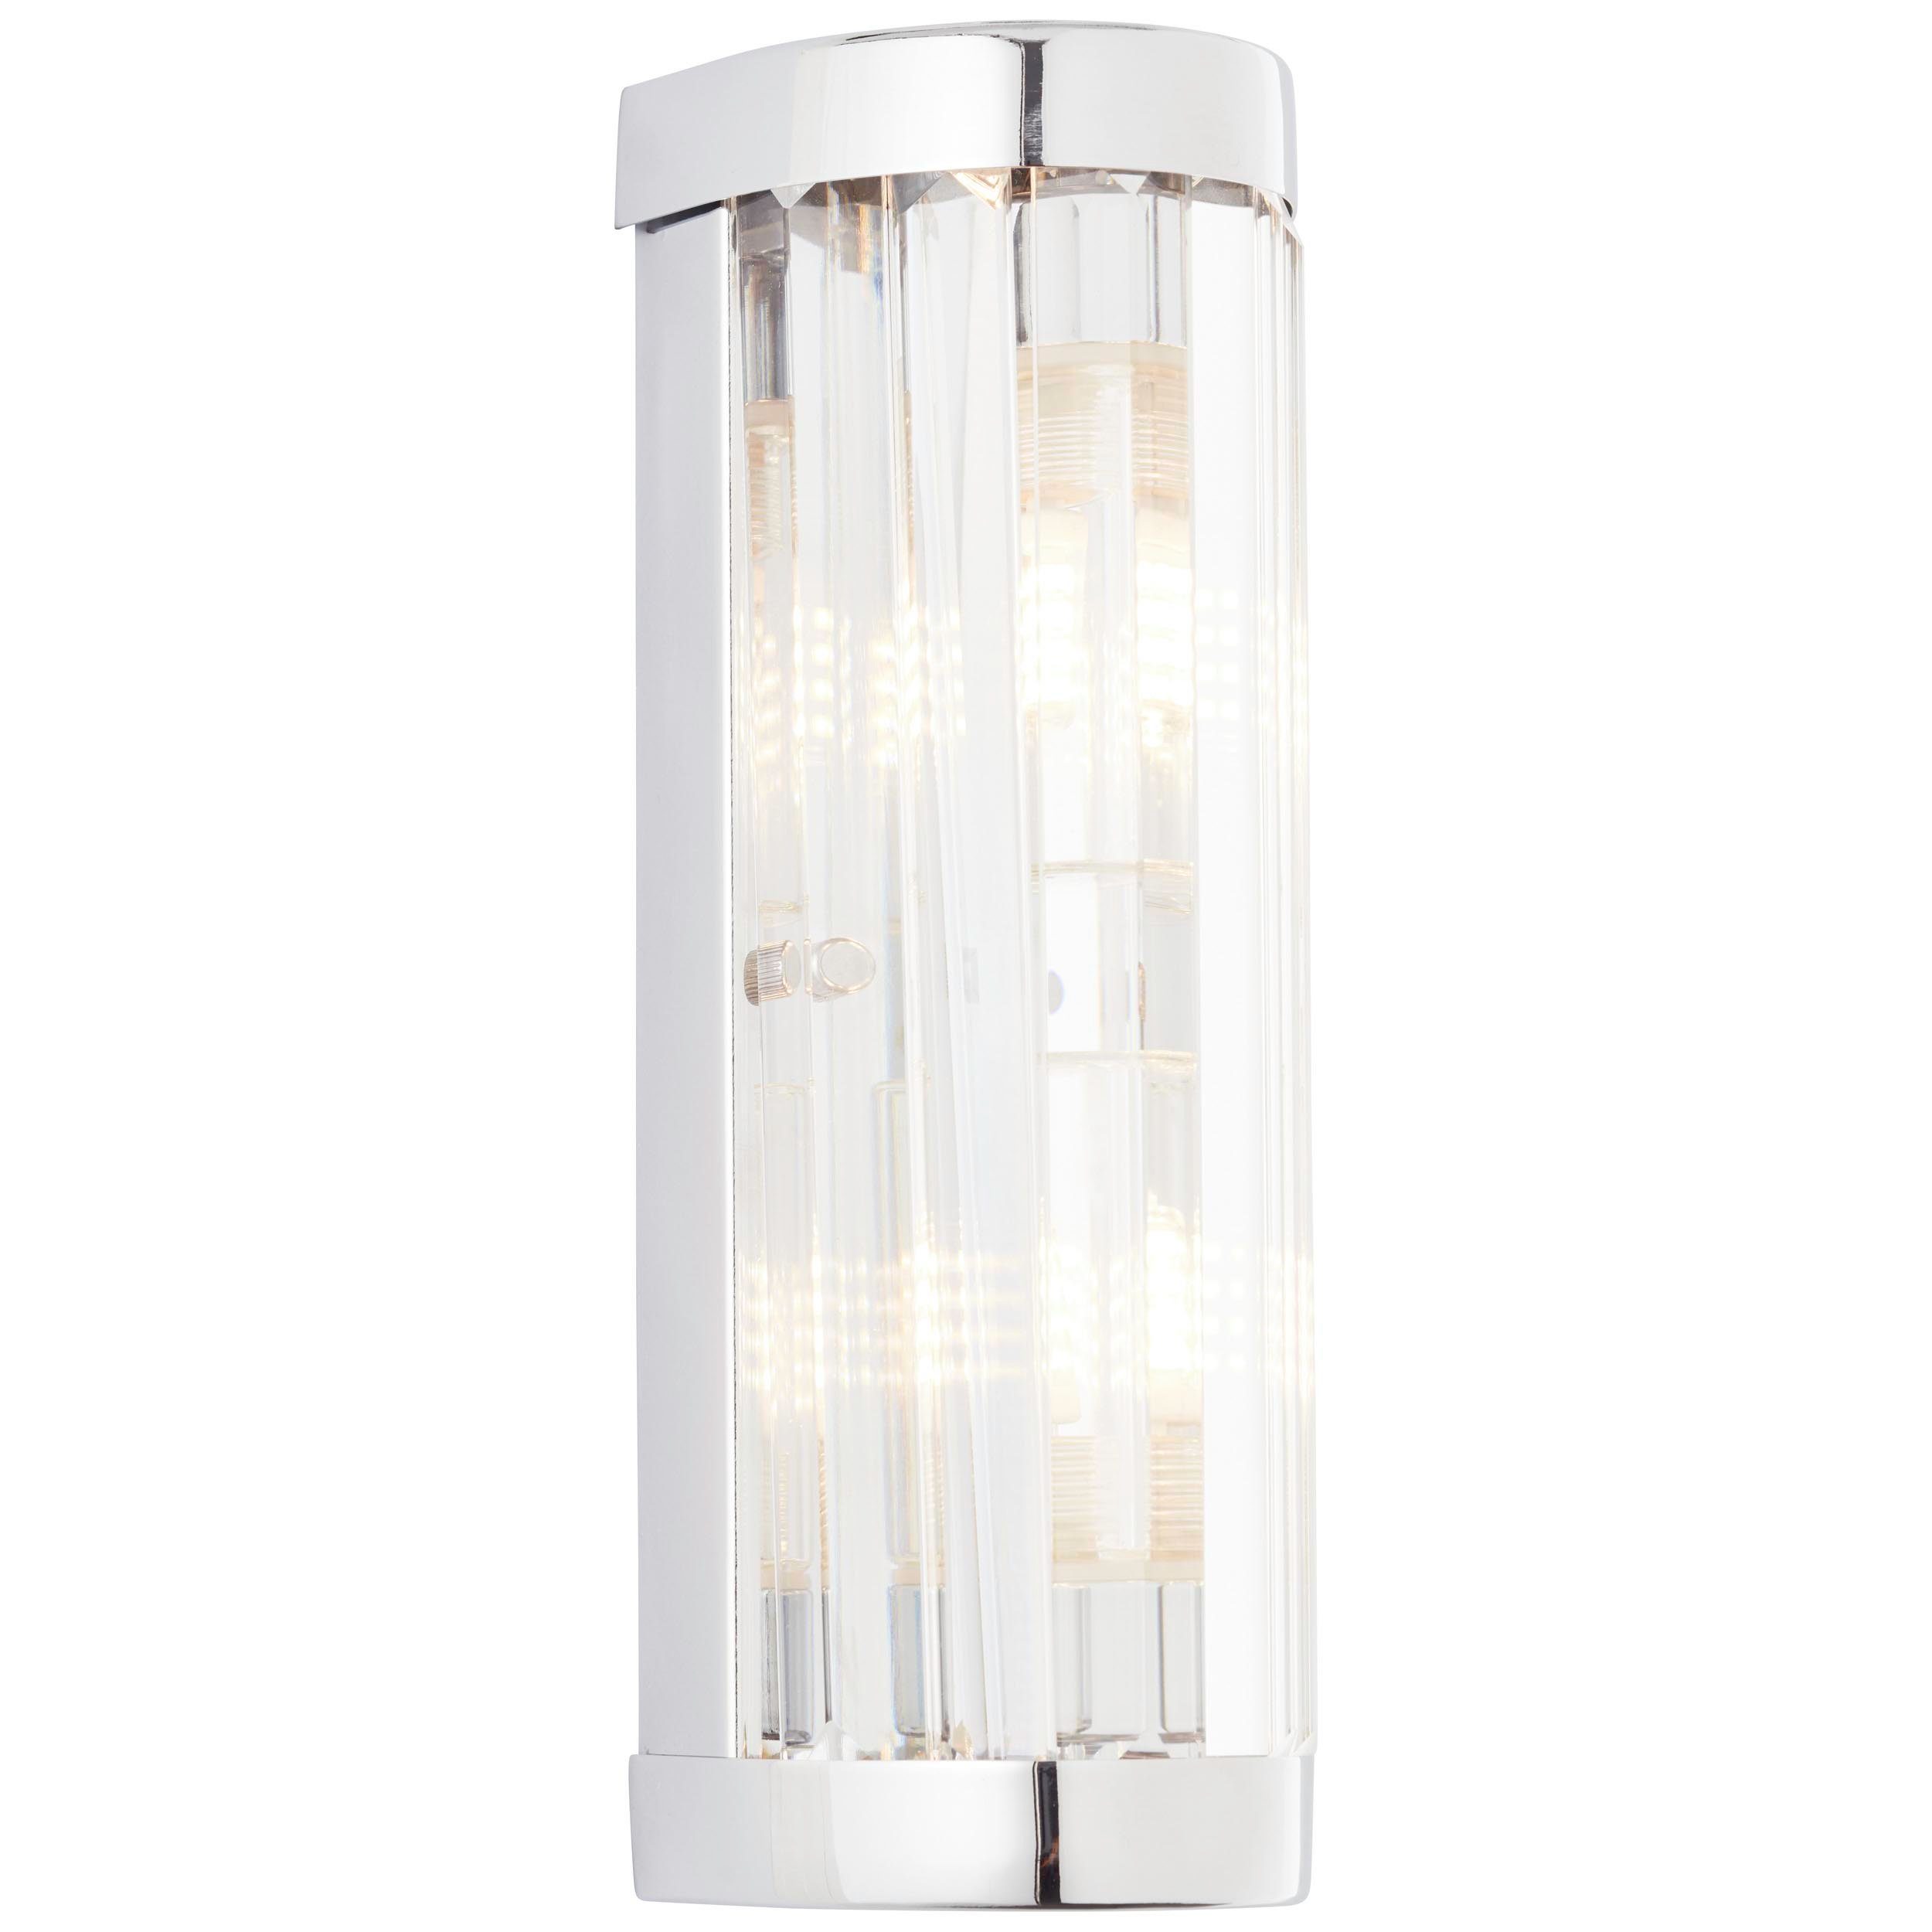 Wandleuchte Brilliant chrom, Leuchten Lampe, 2x 30cm Wandleuchte für G9, Lemont QT14, moderne 18W,St, Badezimmer Lemont, Metall/Glas, SPA-Konzept: